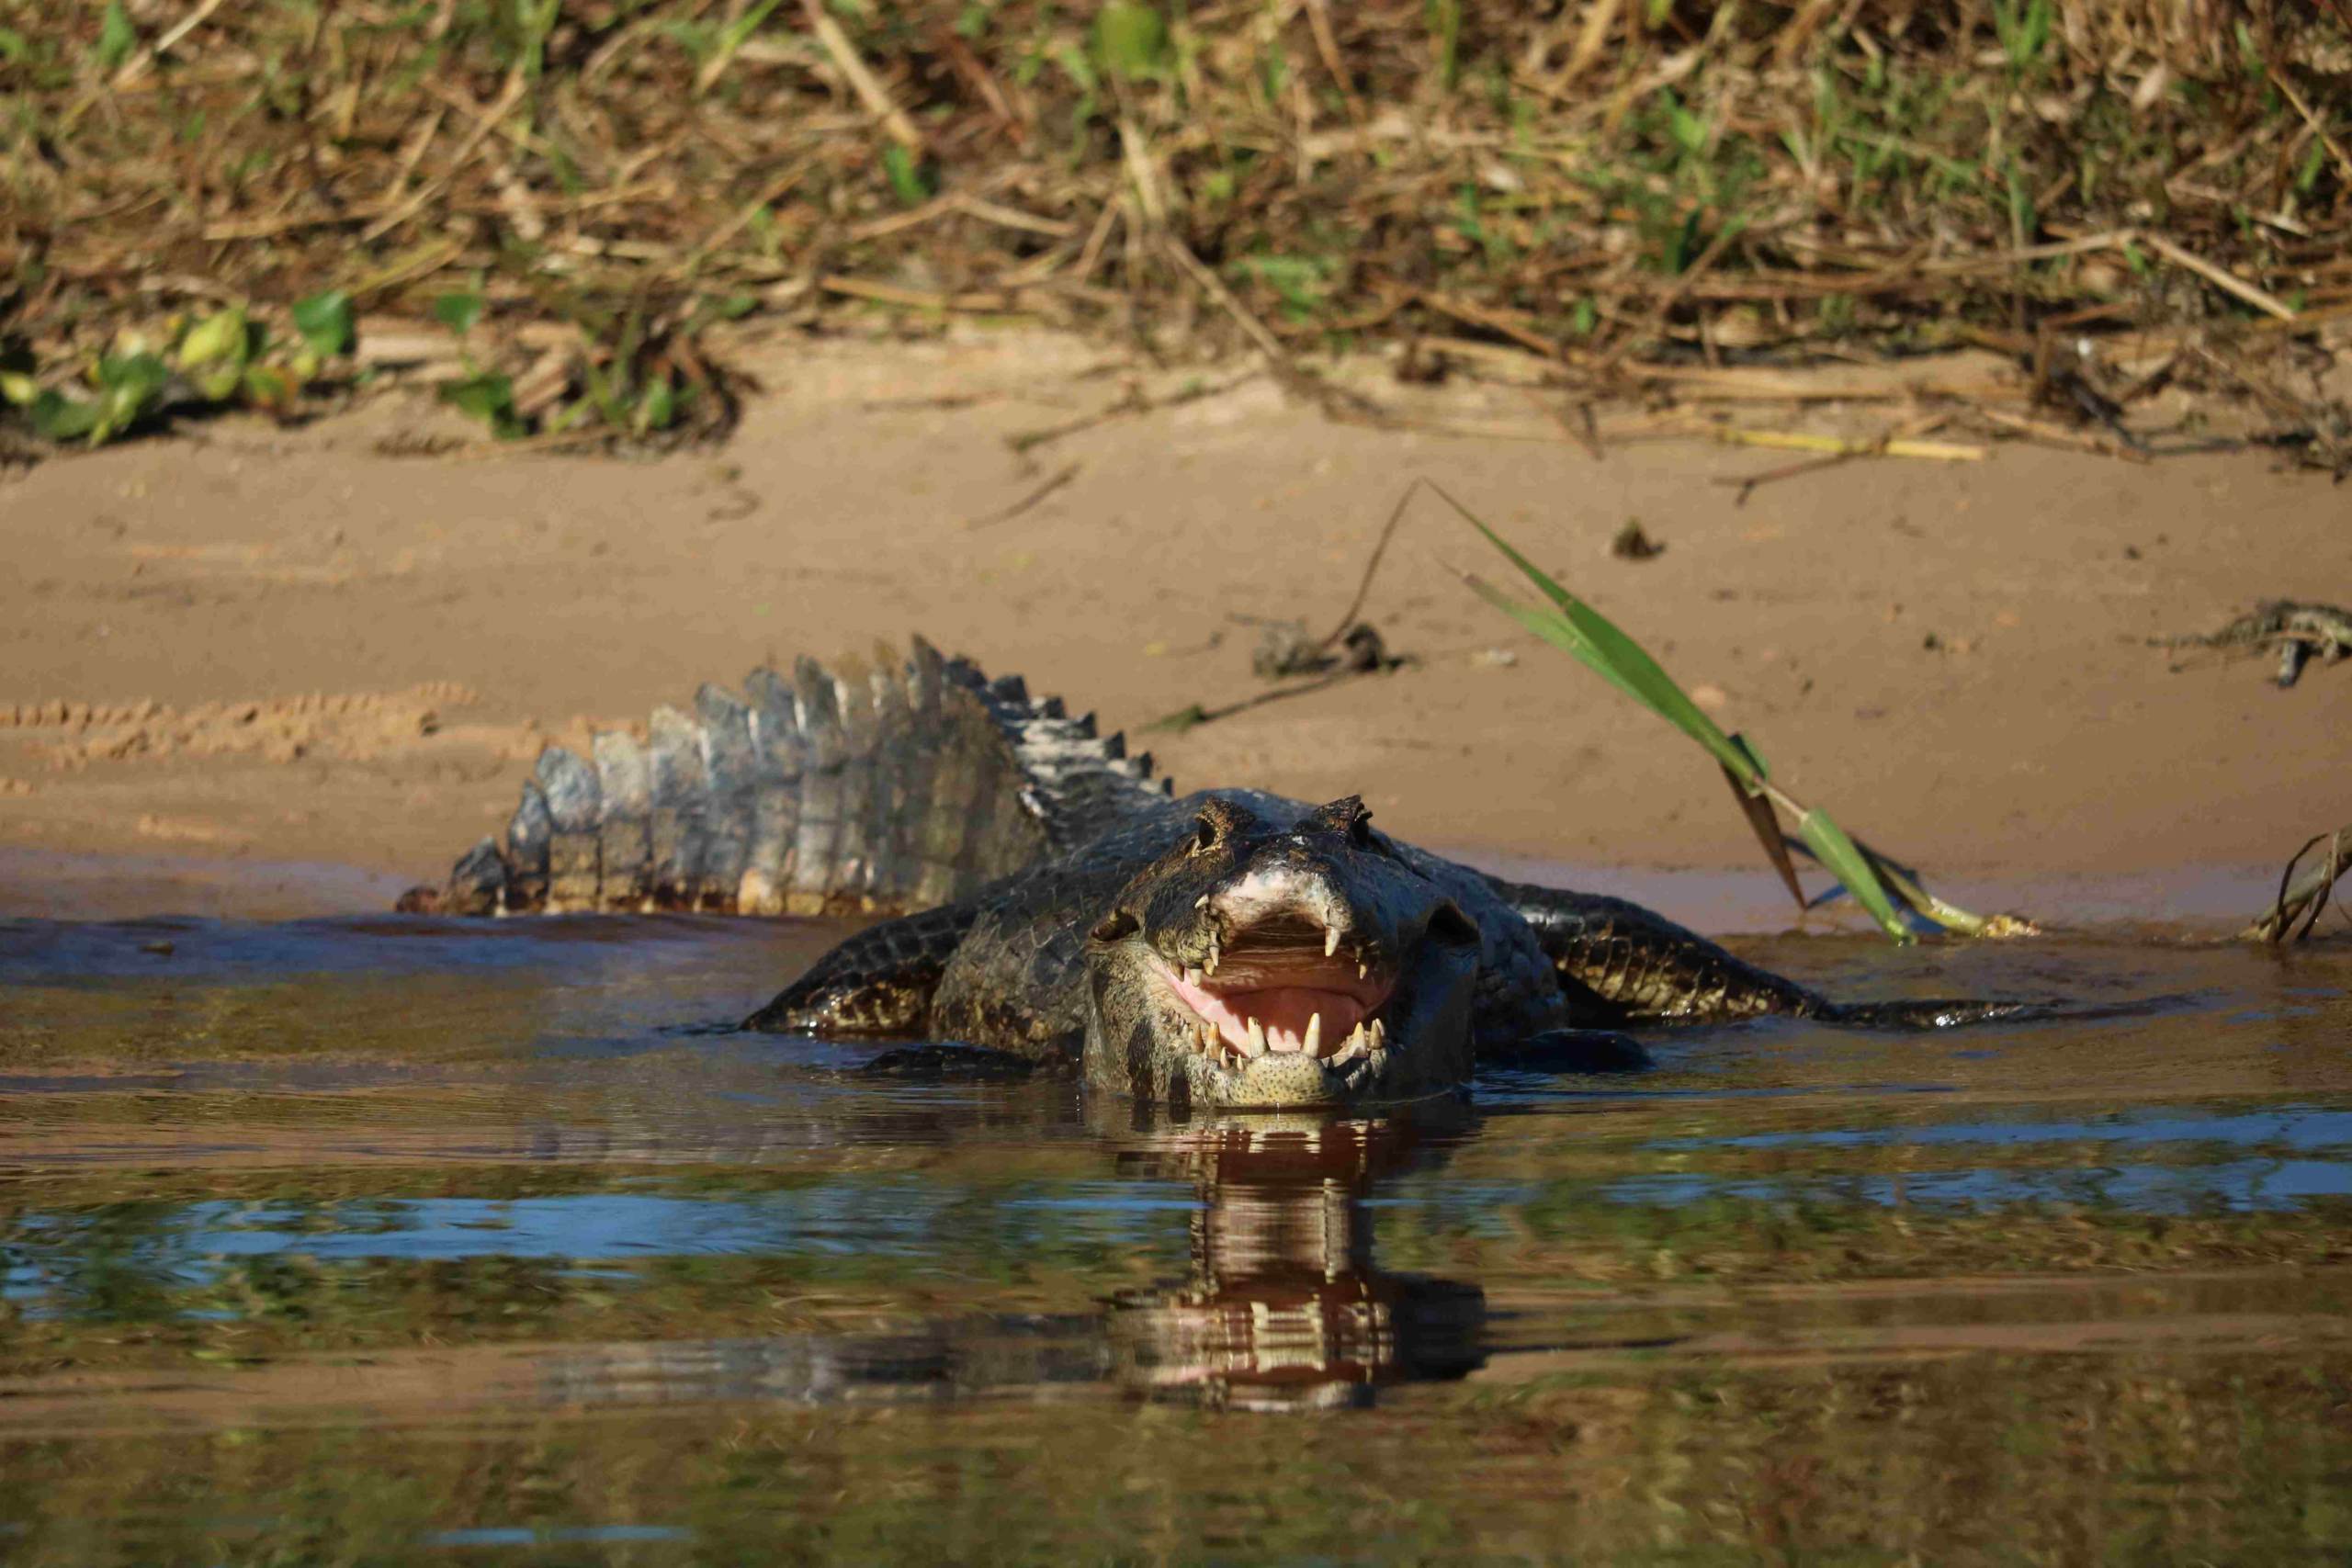 Pantanal alligator on safari